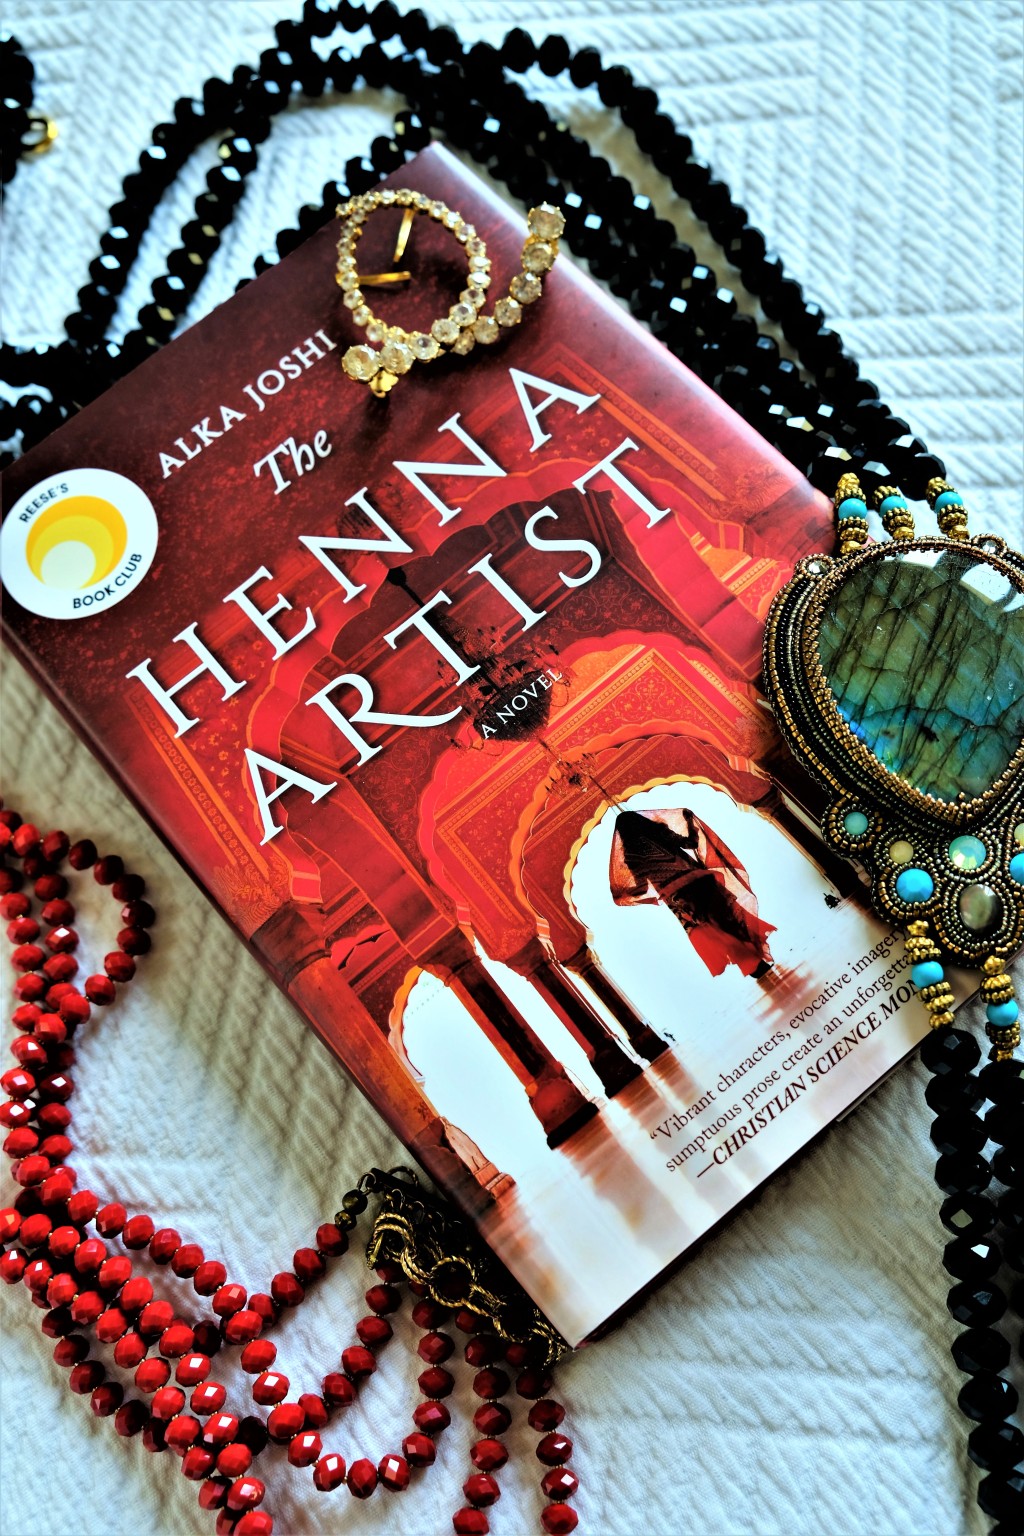 The Henna Artist by Alka Joshi